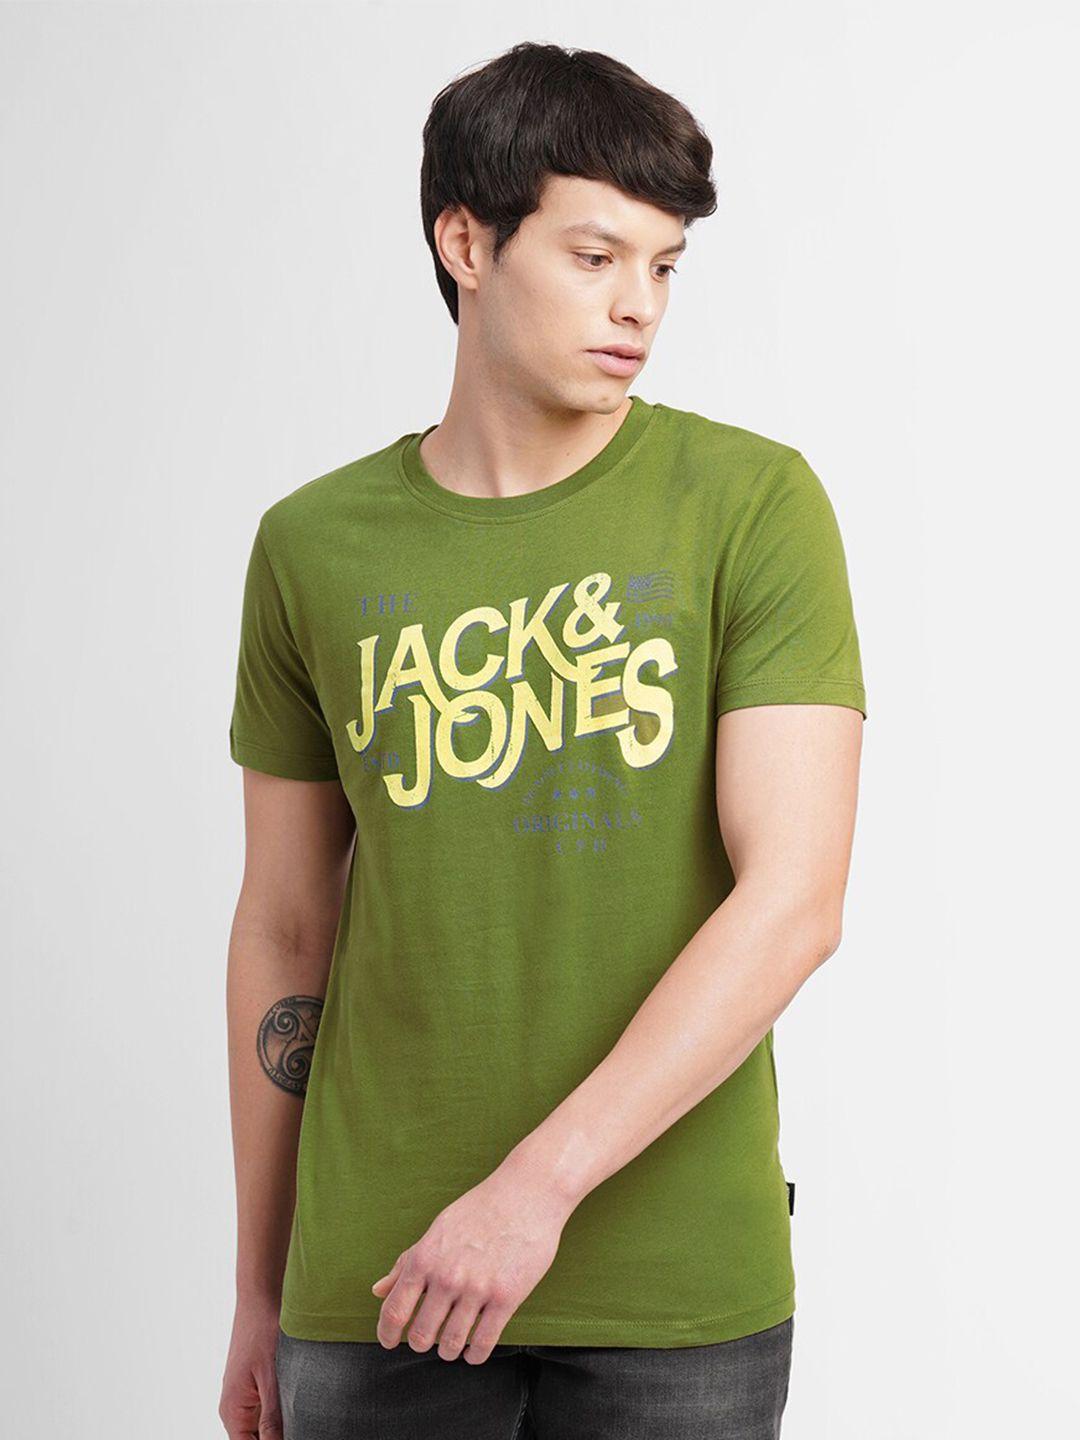 jack & jones typography printed cotton slim fit t-shirt